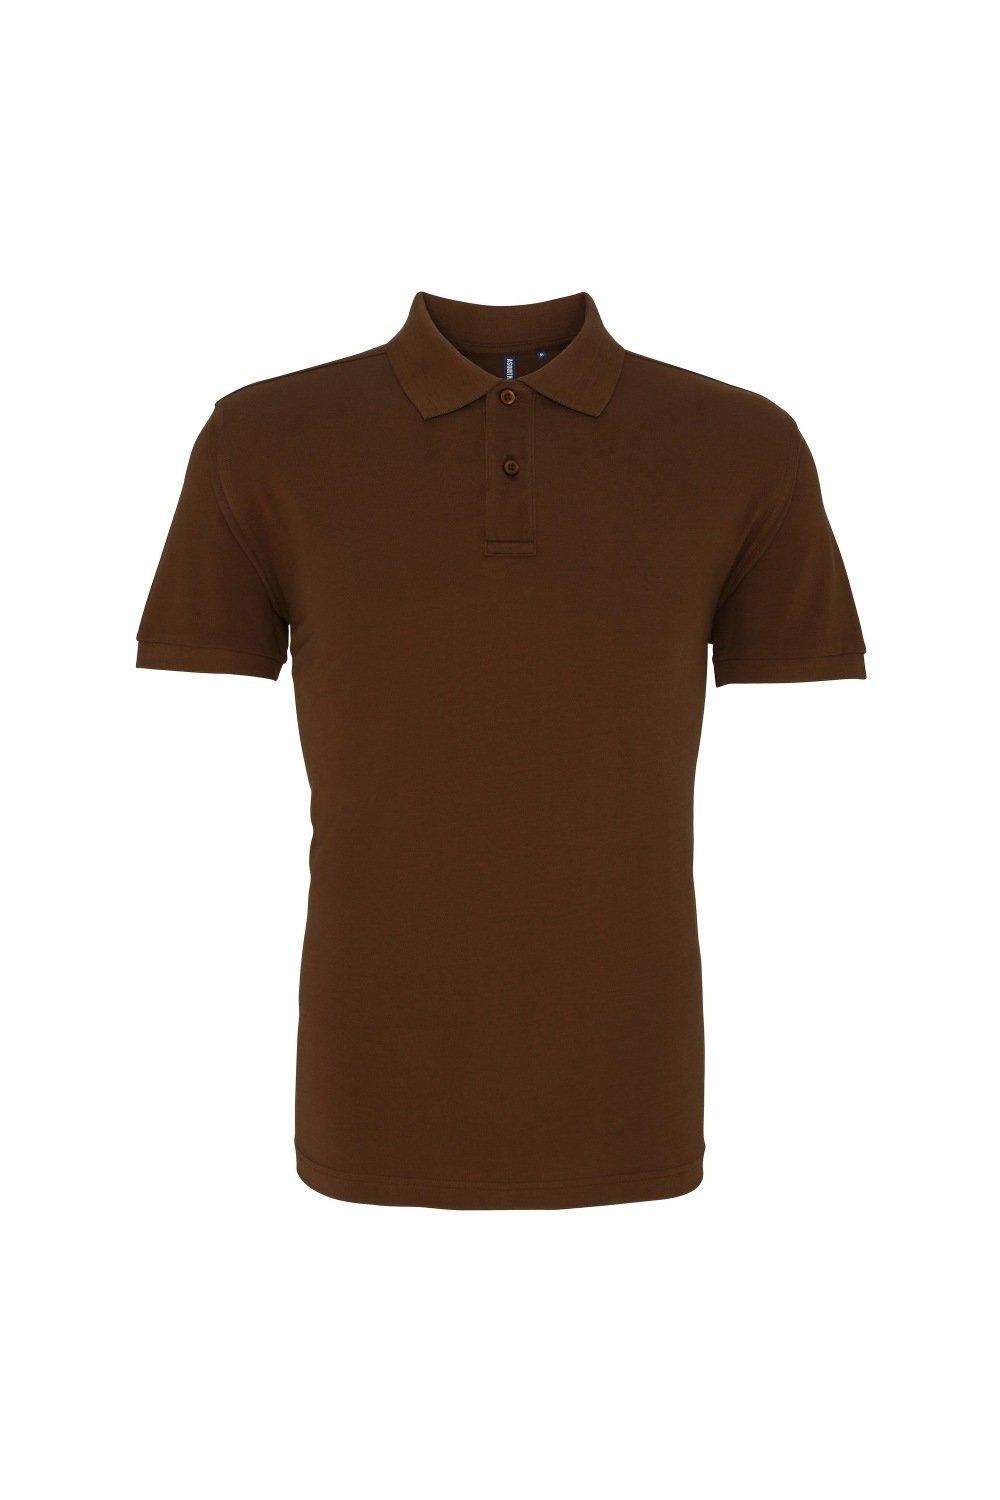 Простая рубашка-поло с короткими рукавами Asquith & Fox, коричневый цена и фото